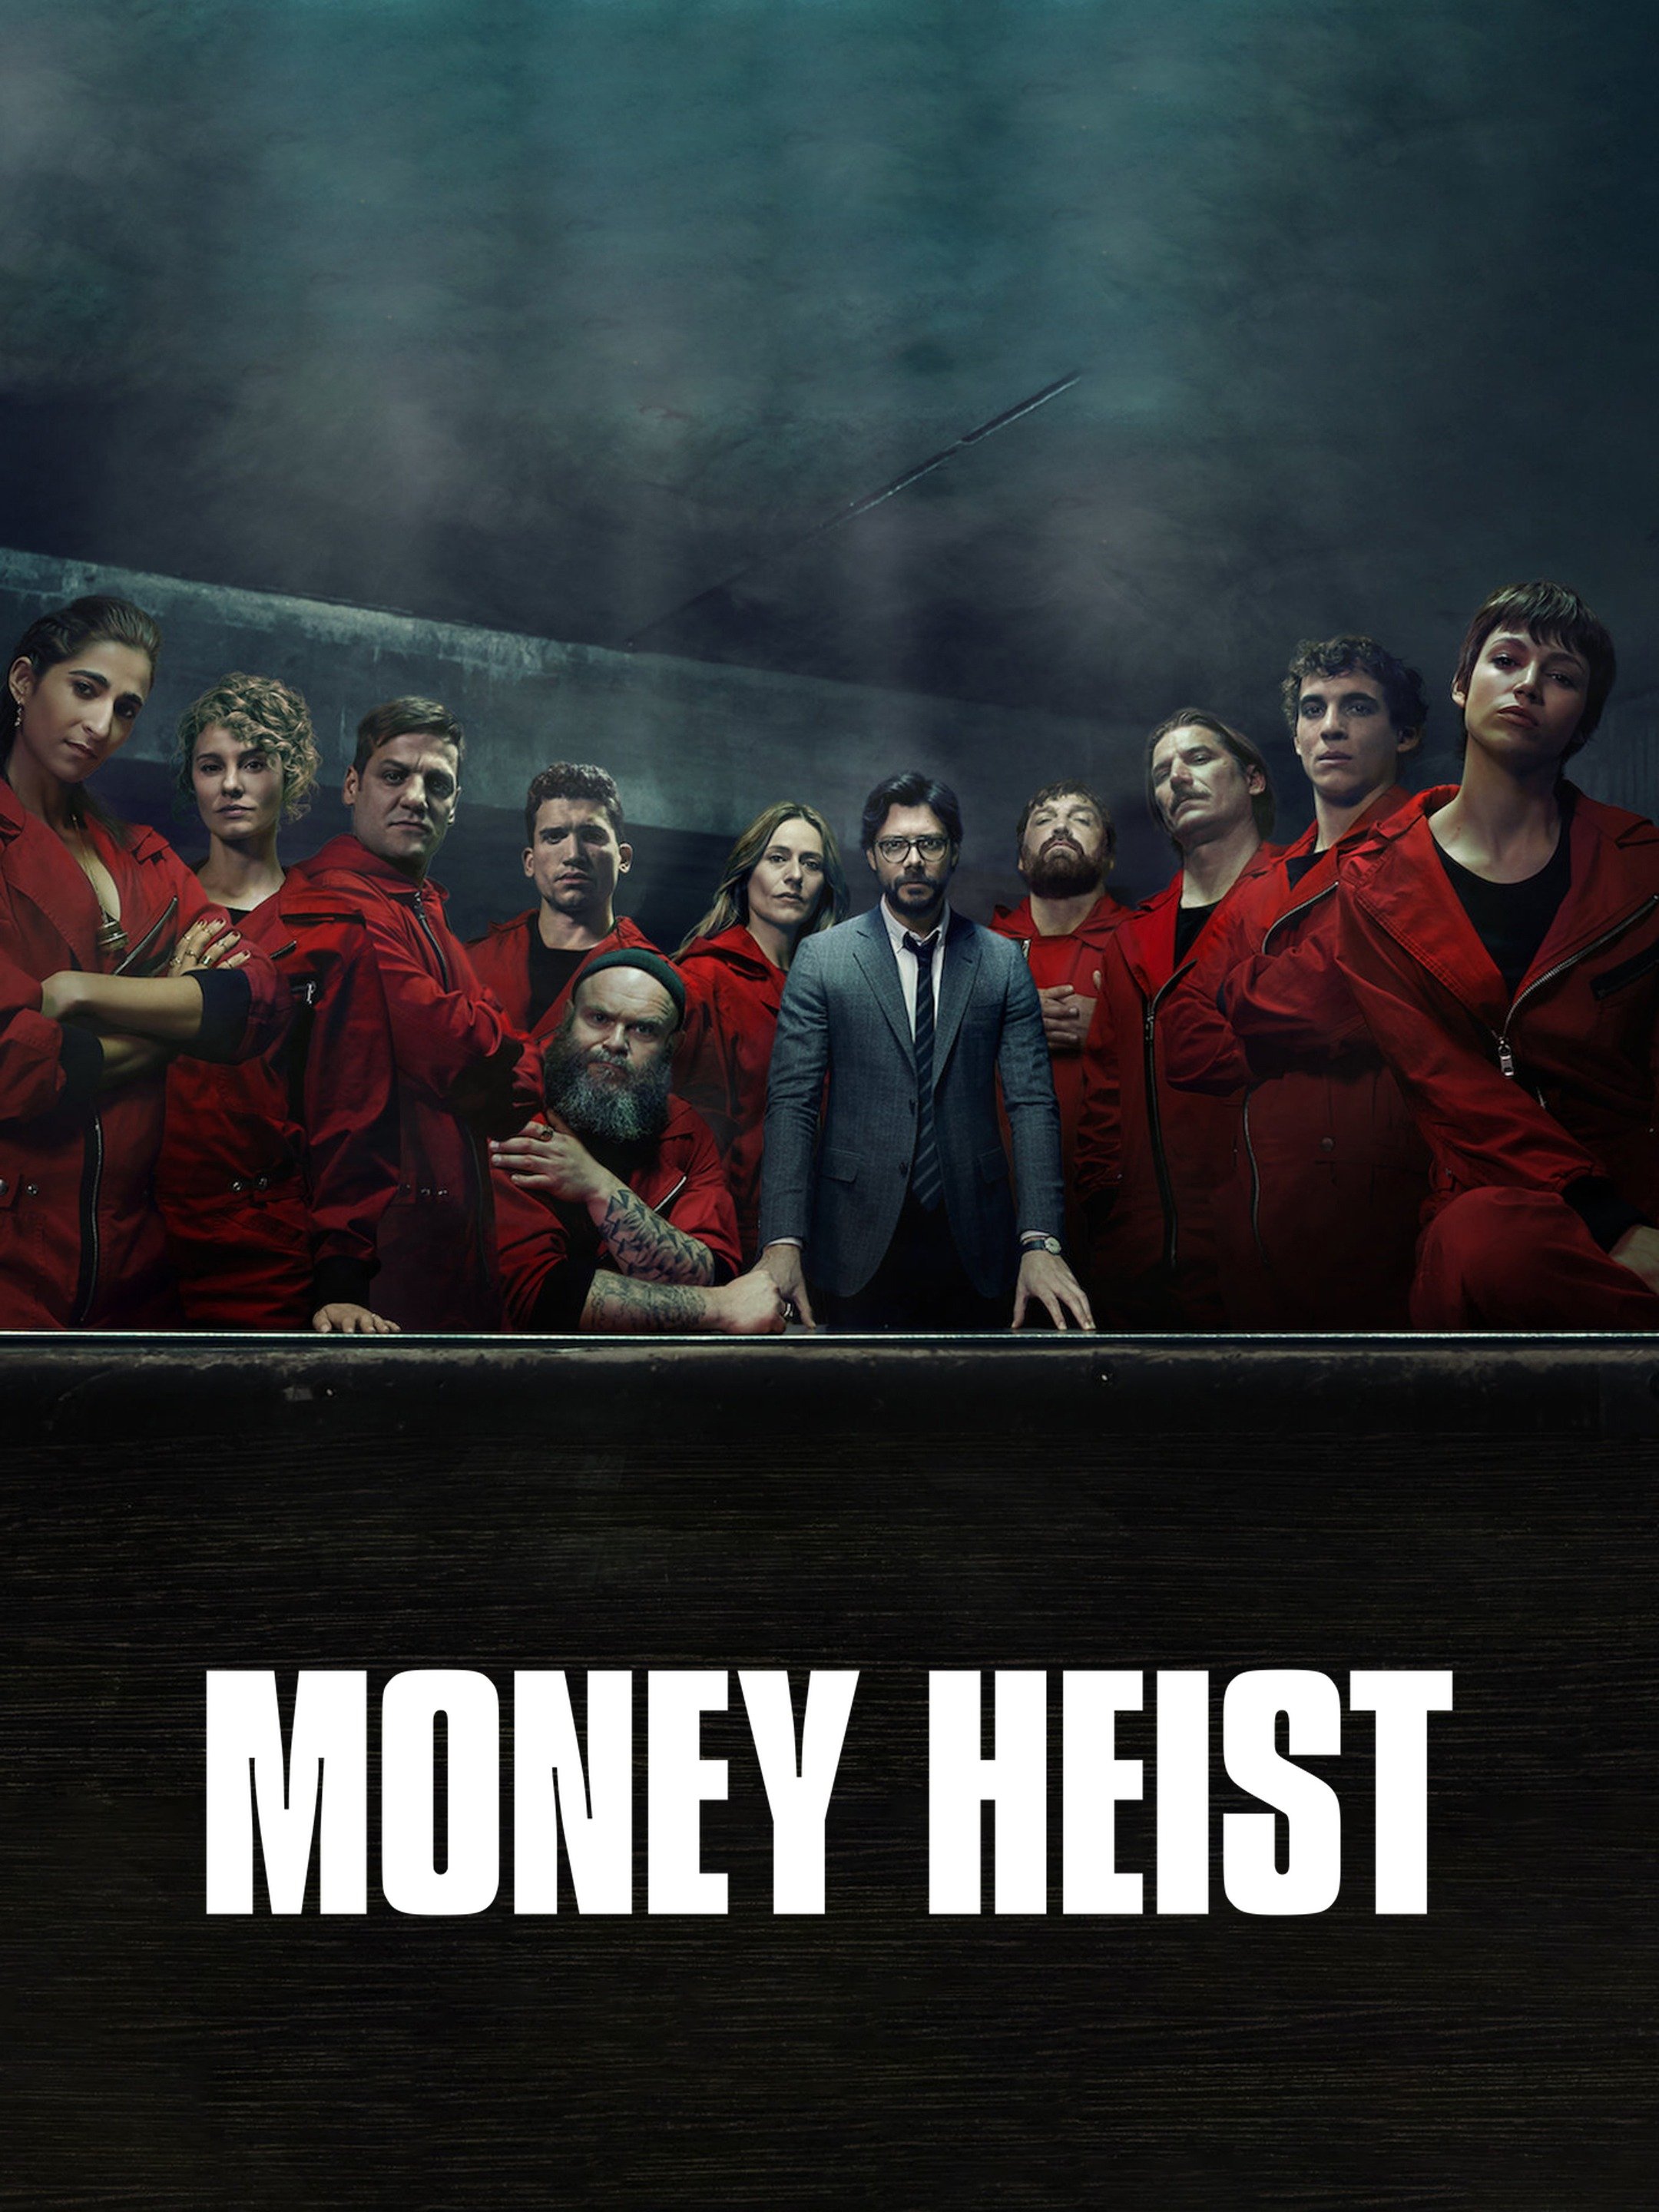 Heist cast money Money Heist: